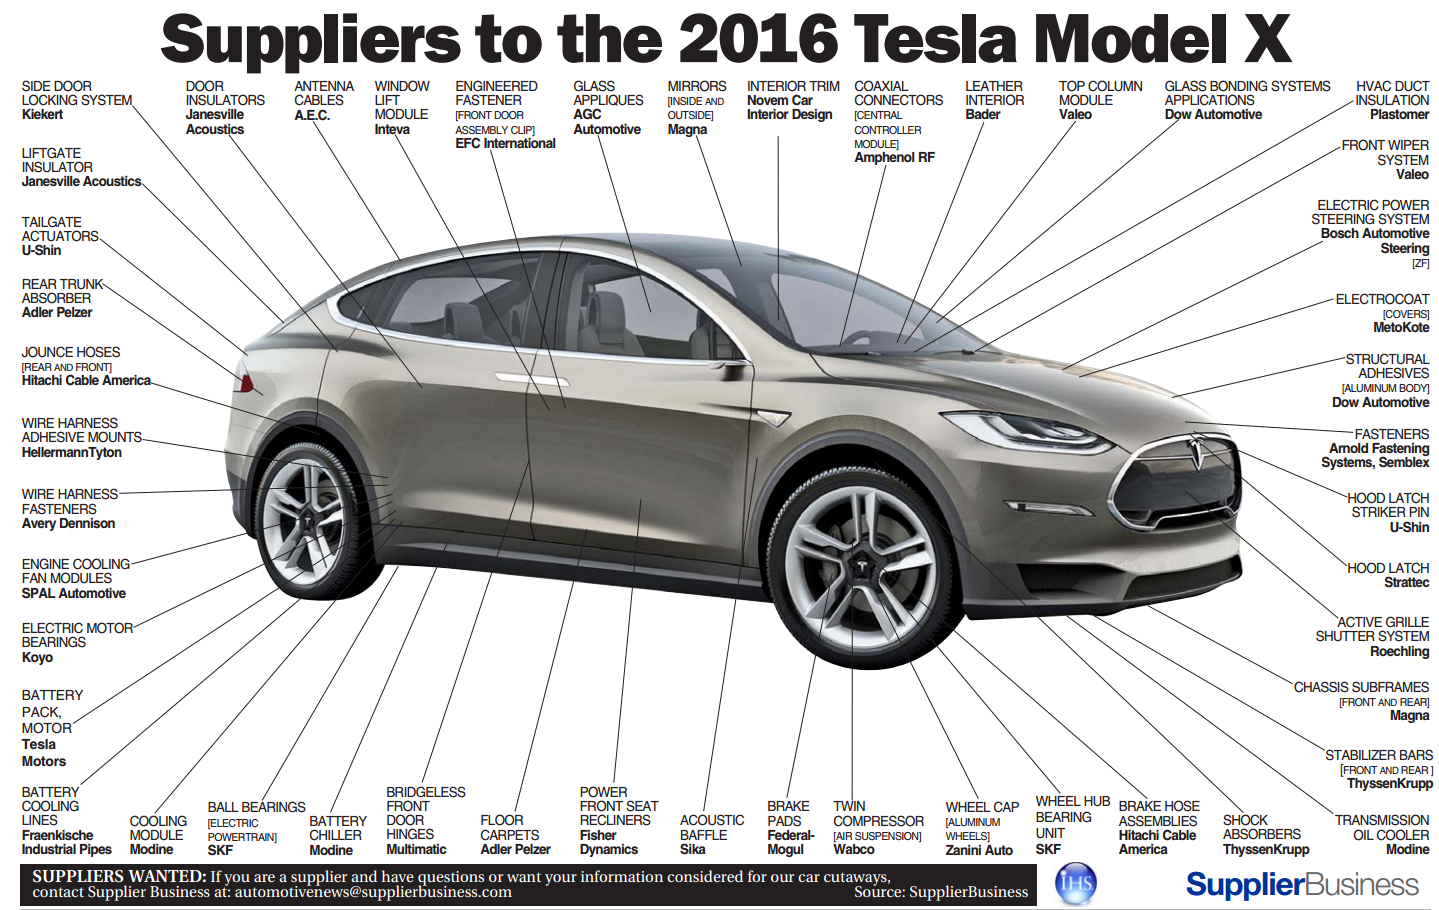 Single suppliers to Tesla Model X